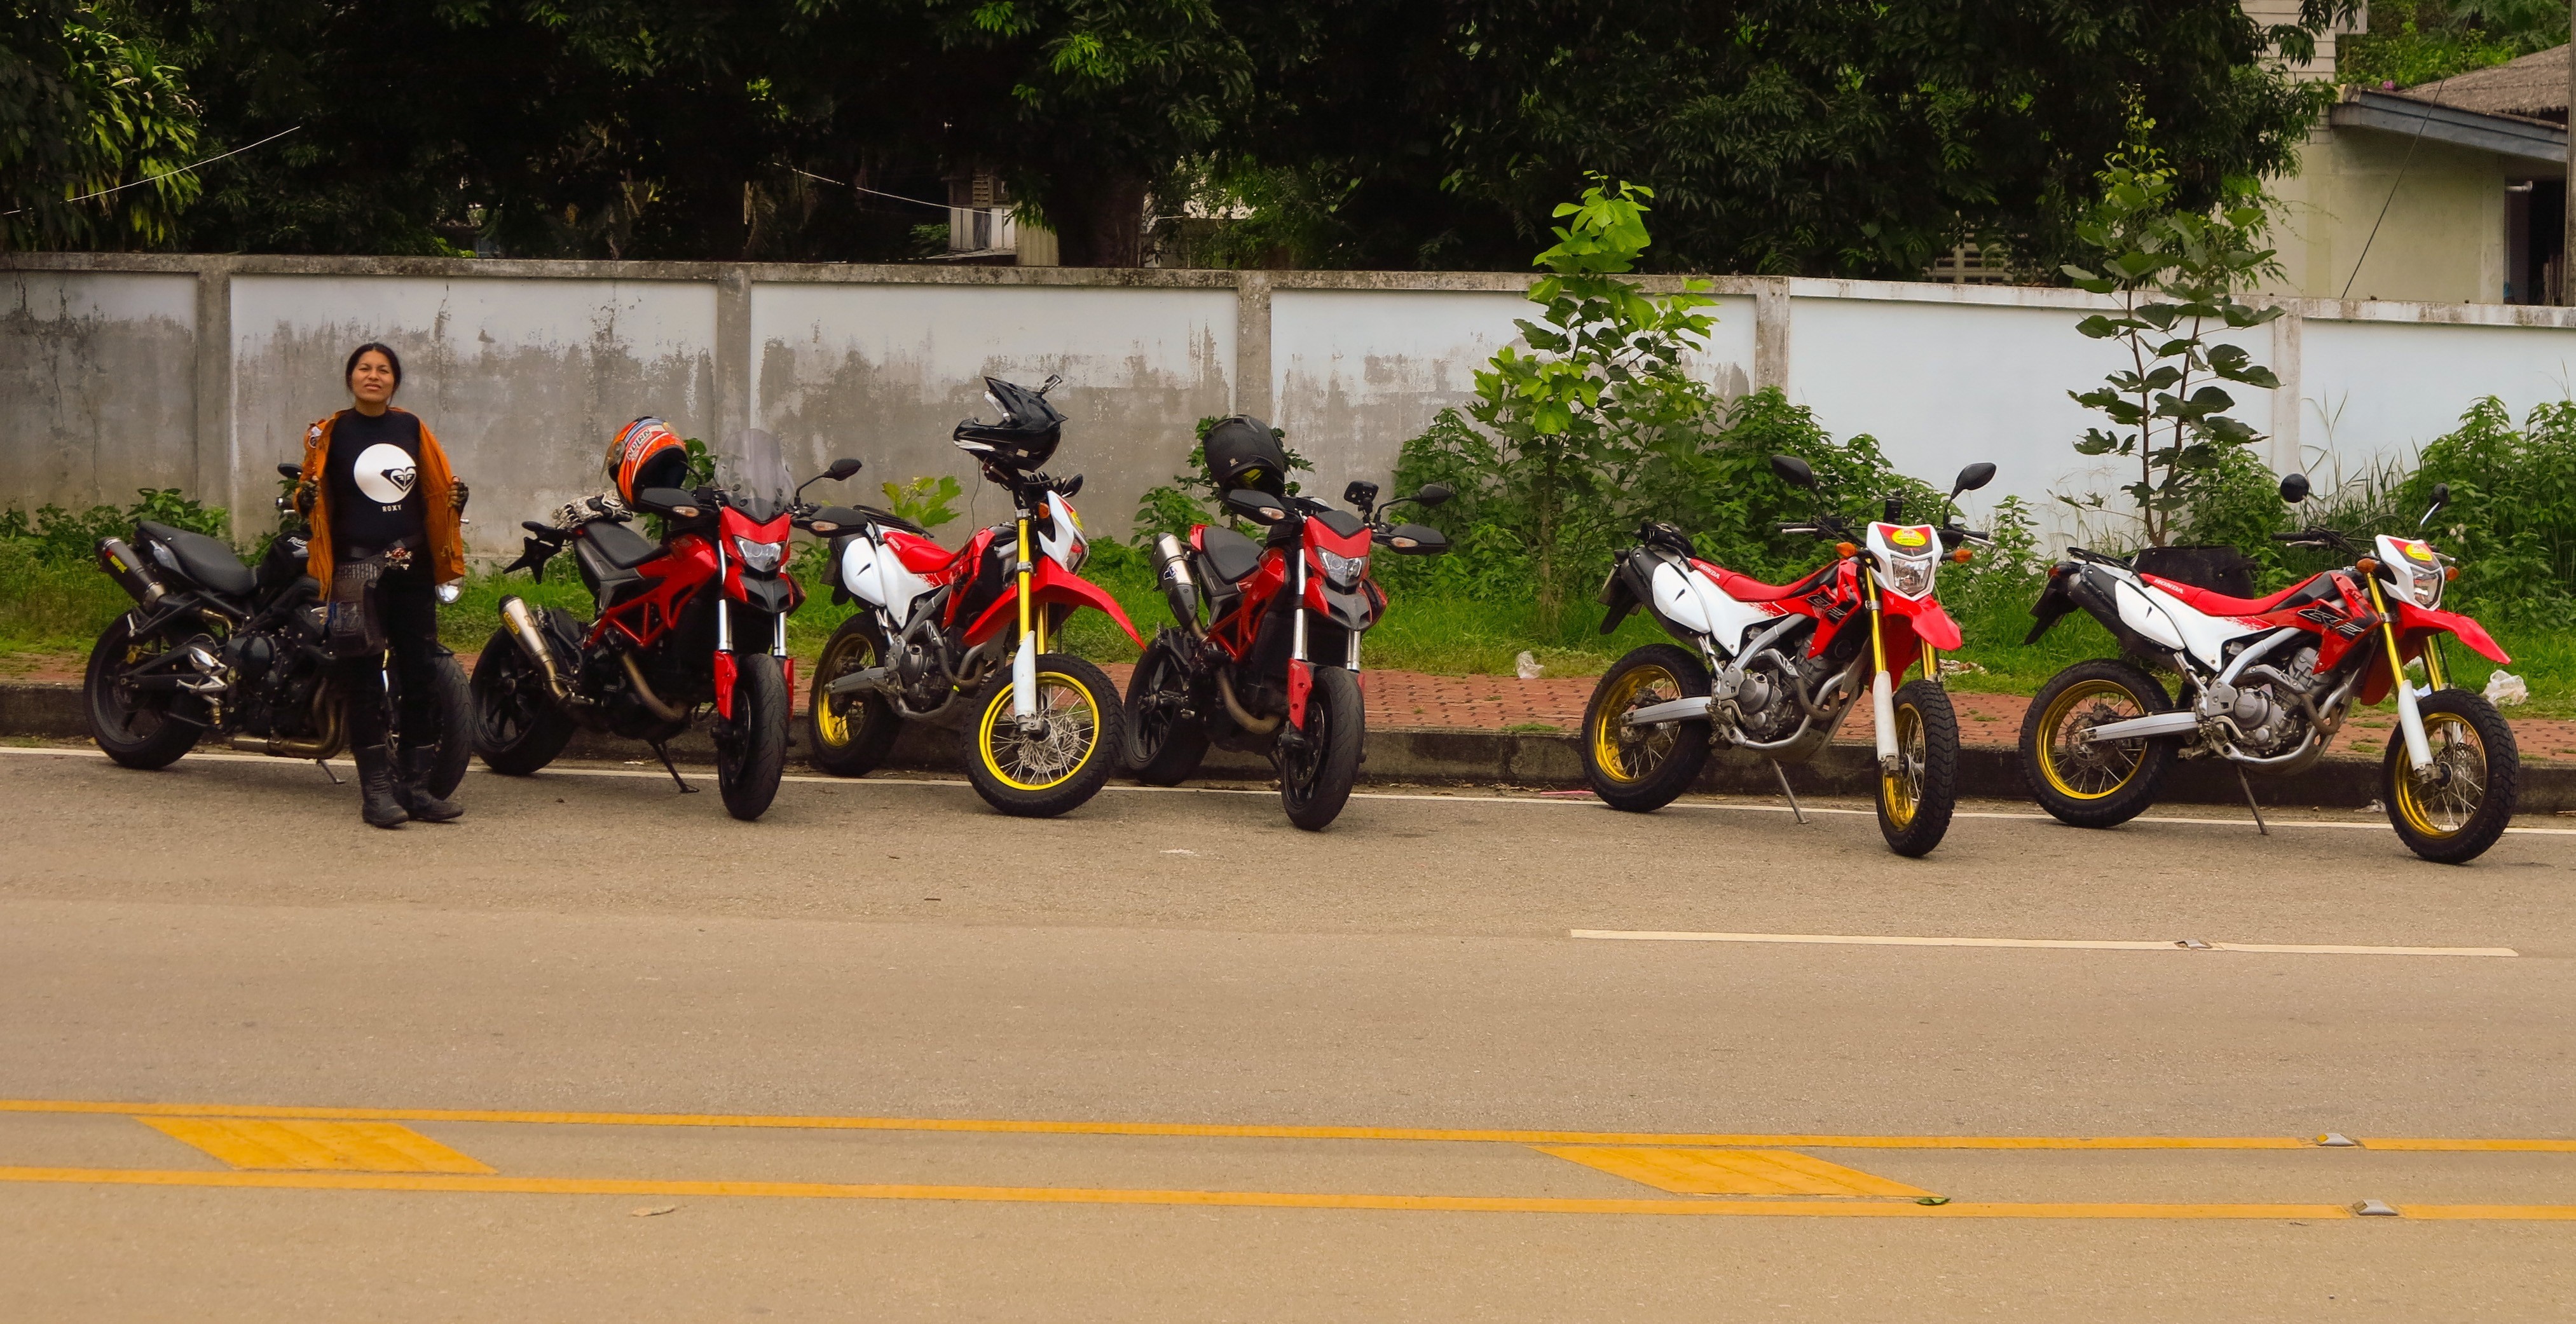 Thailand motorcycle tours with Motoasia. Travel Thailand with our motorcycle adventure tours.